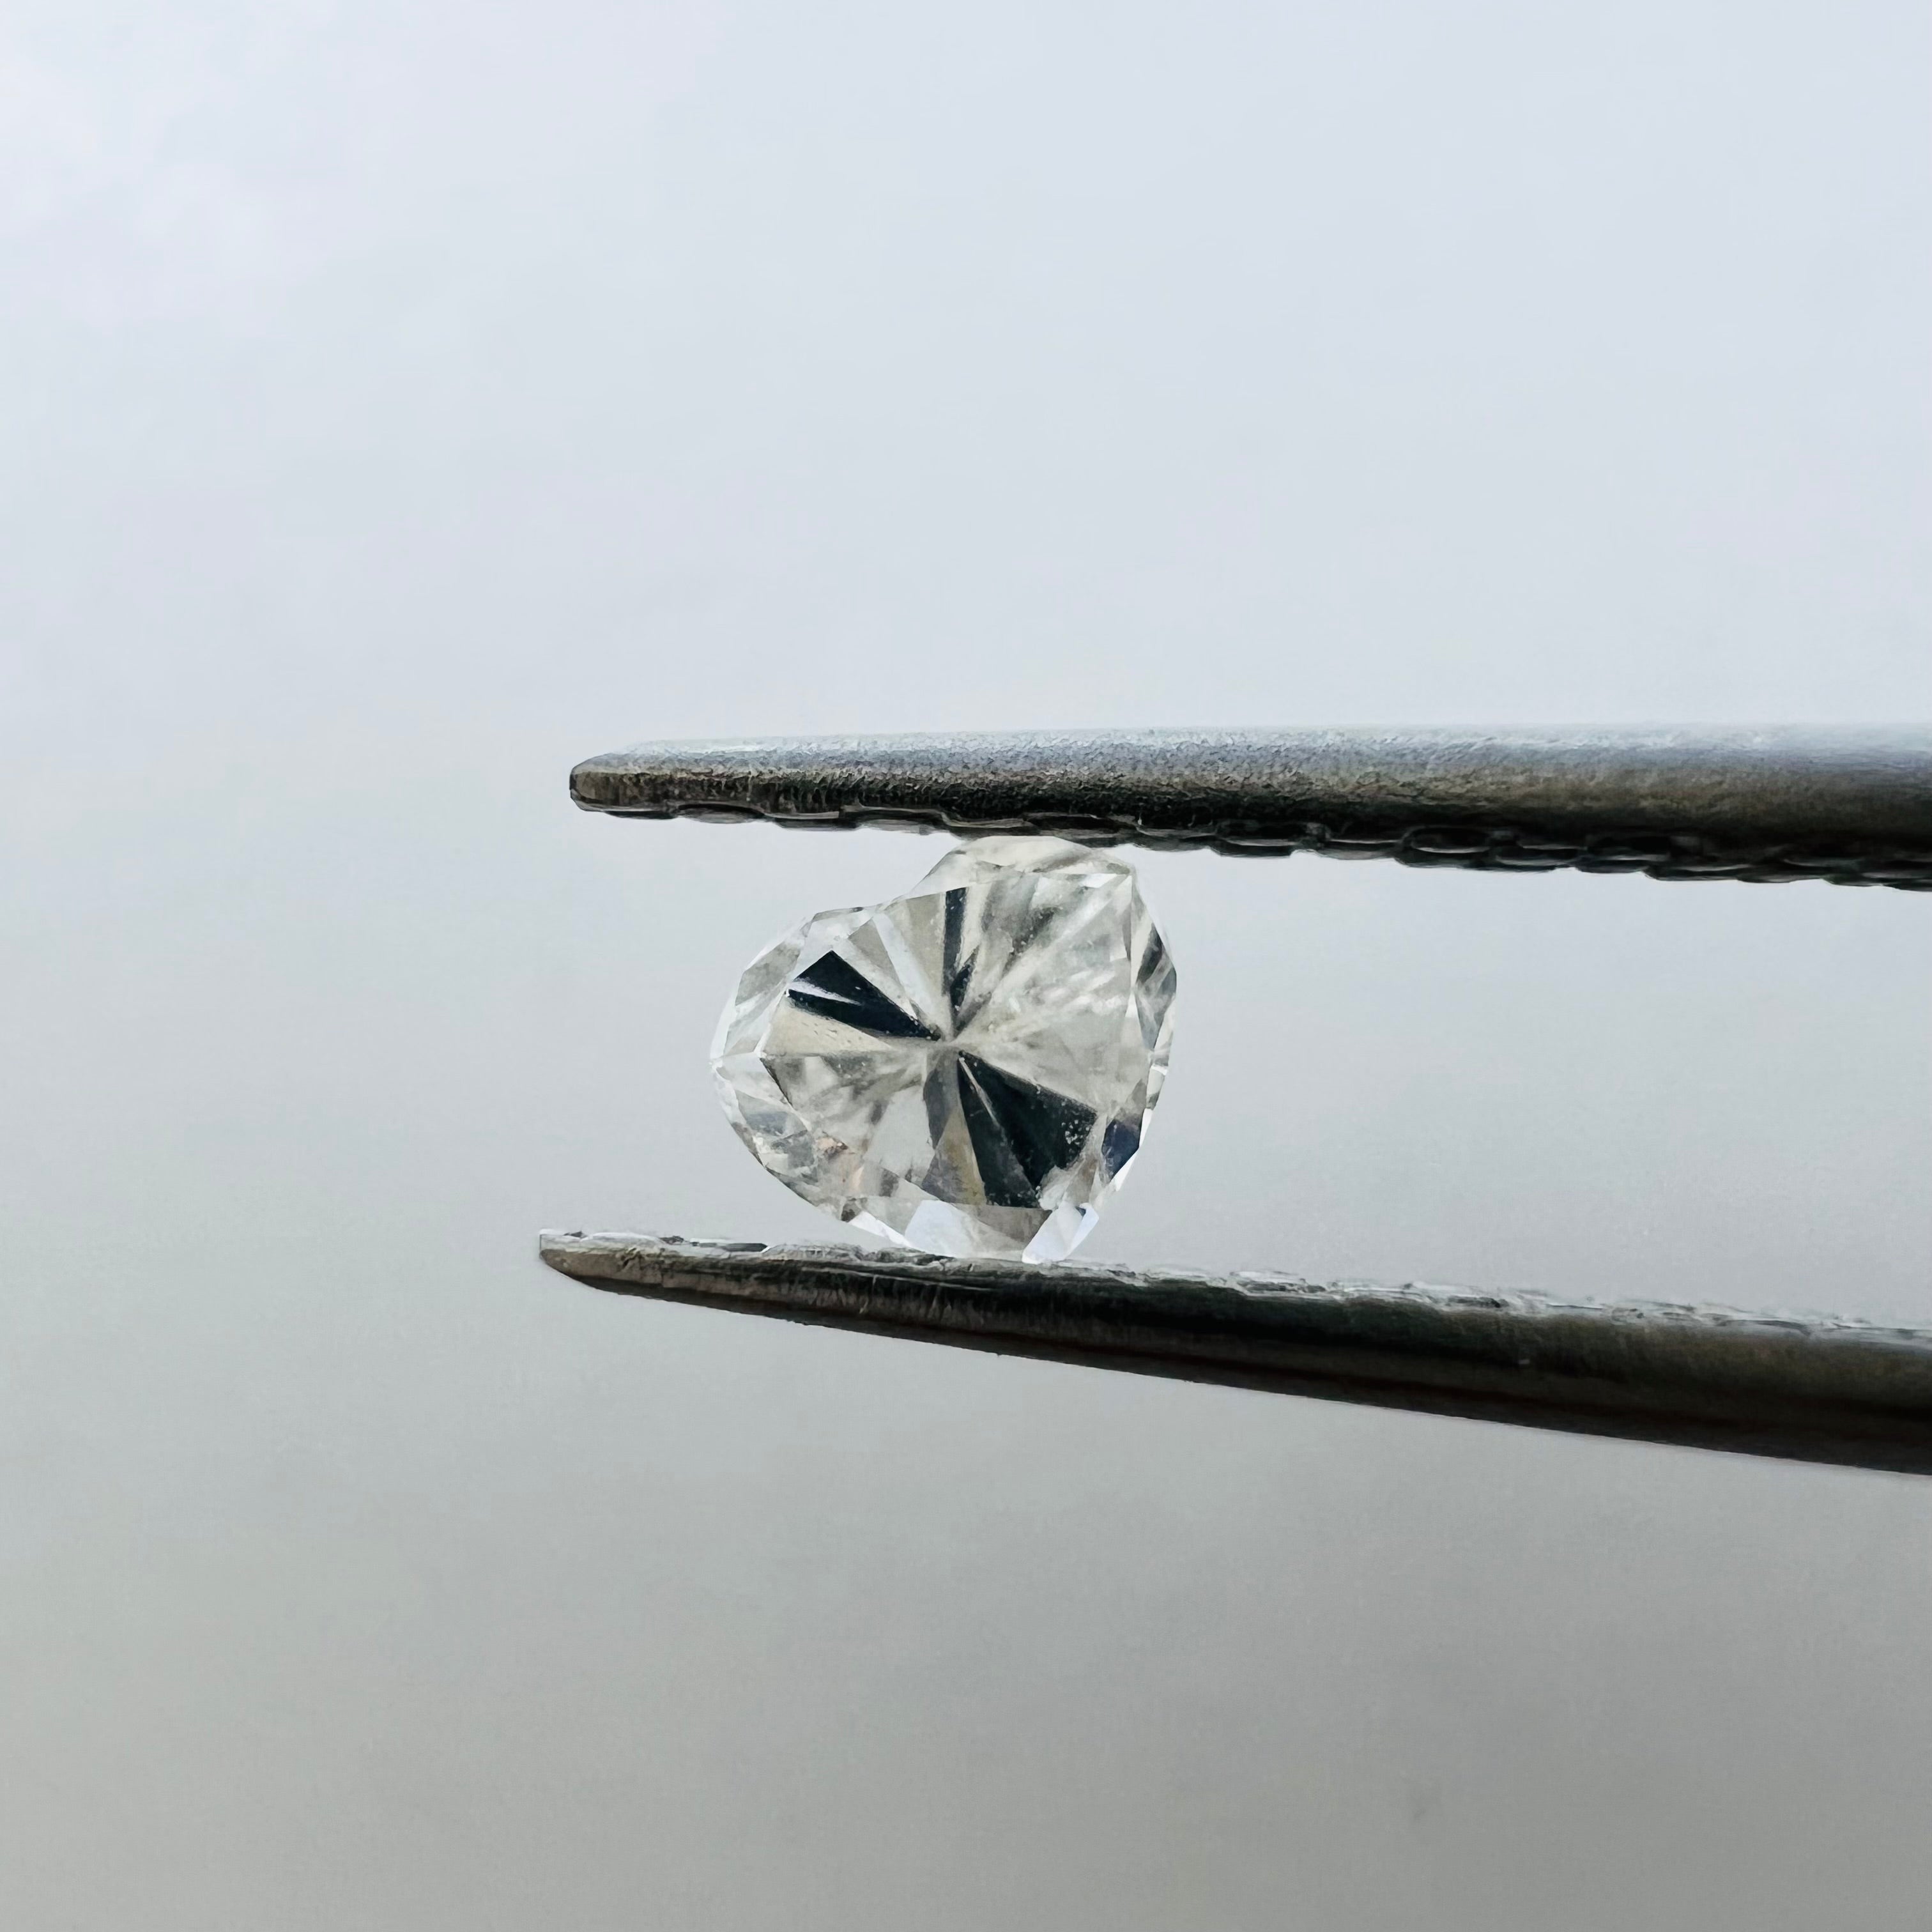 .12CT Heart Shape Diamond I VS2 3.04x3.48x2.00mm Natural Earth mined